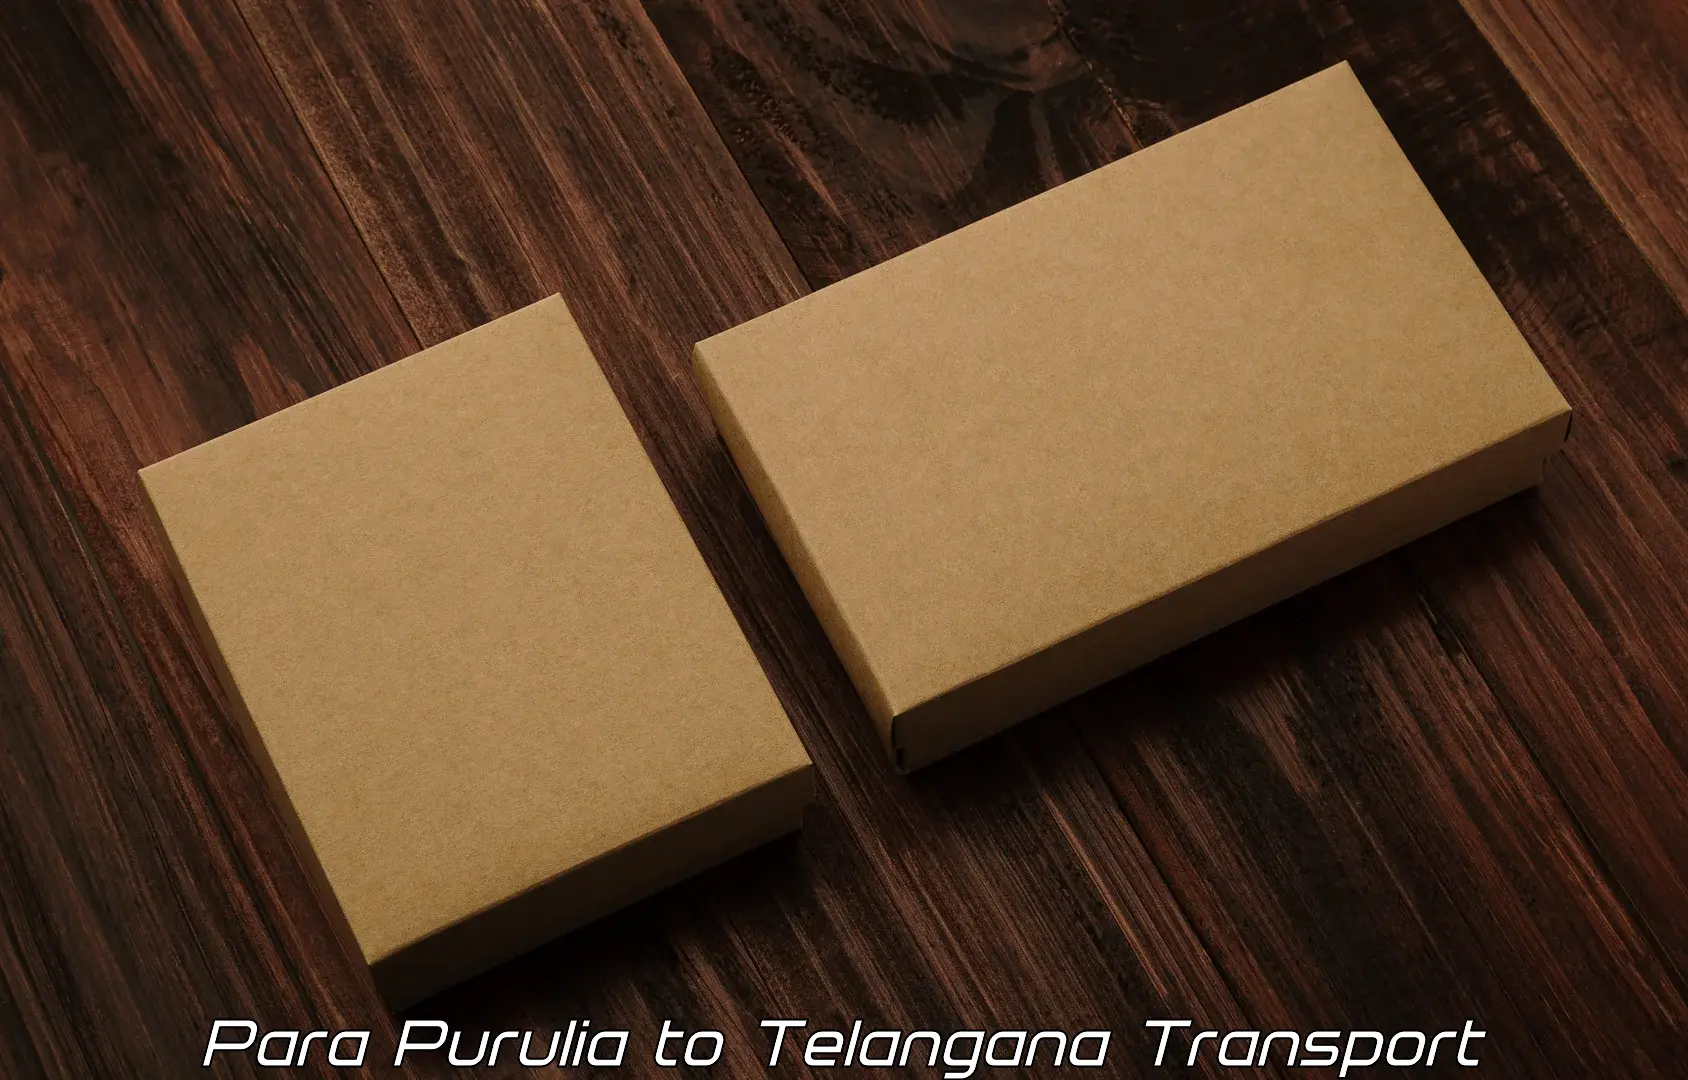 Goods delivery service Para Purulia to Allapalli